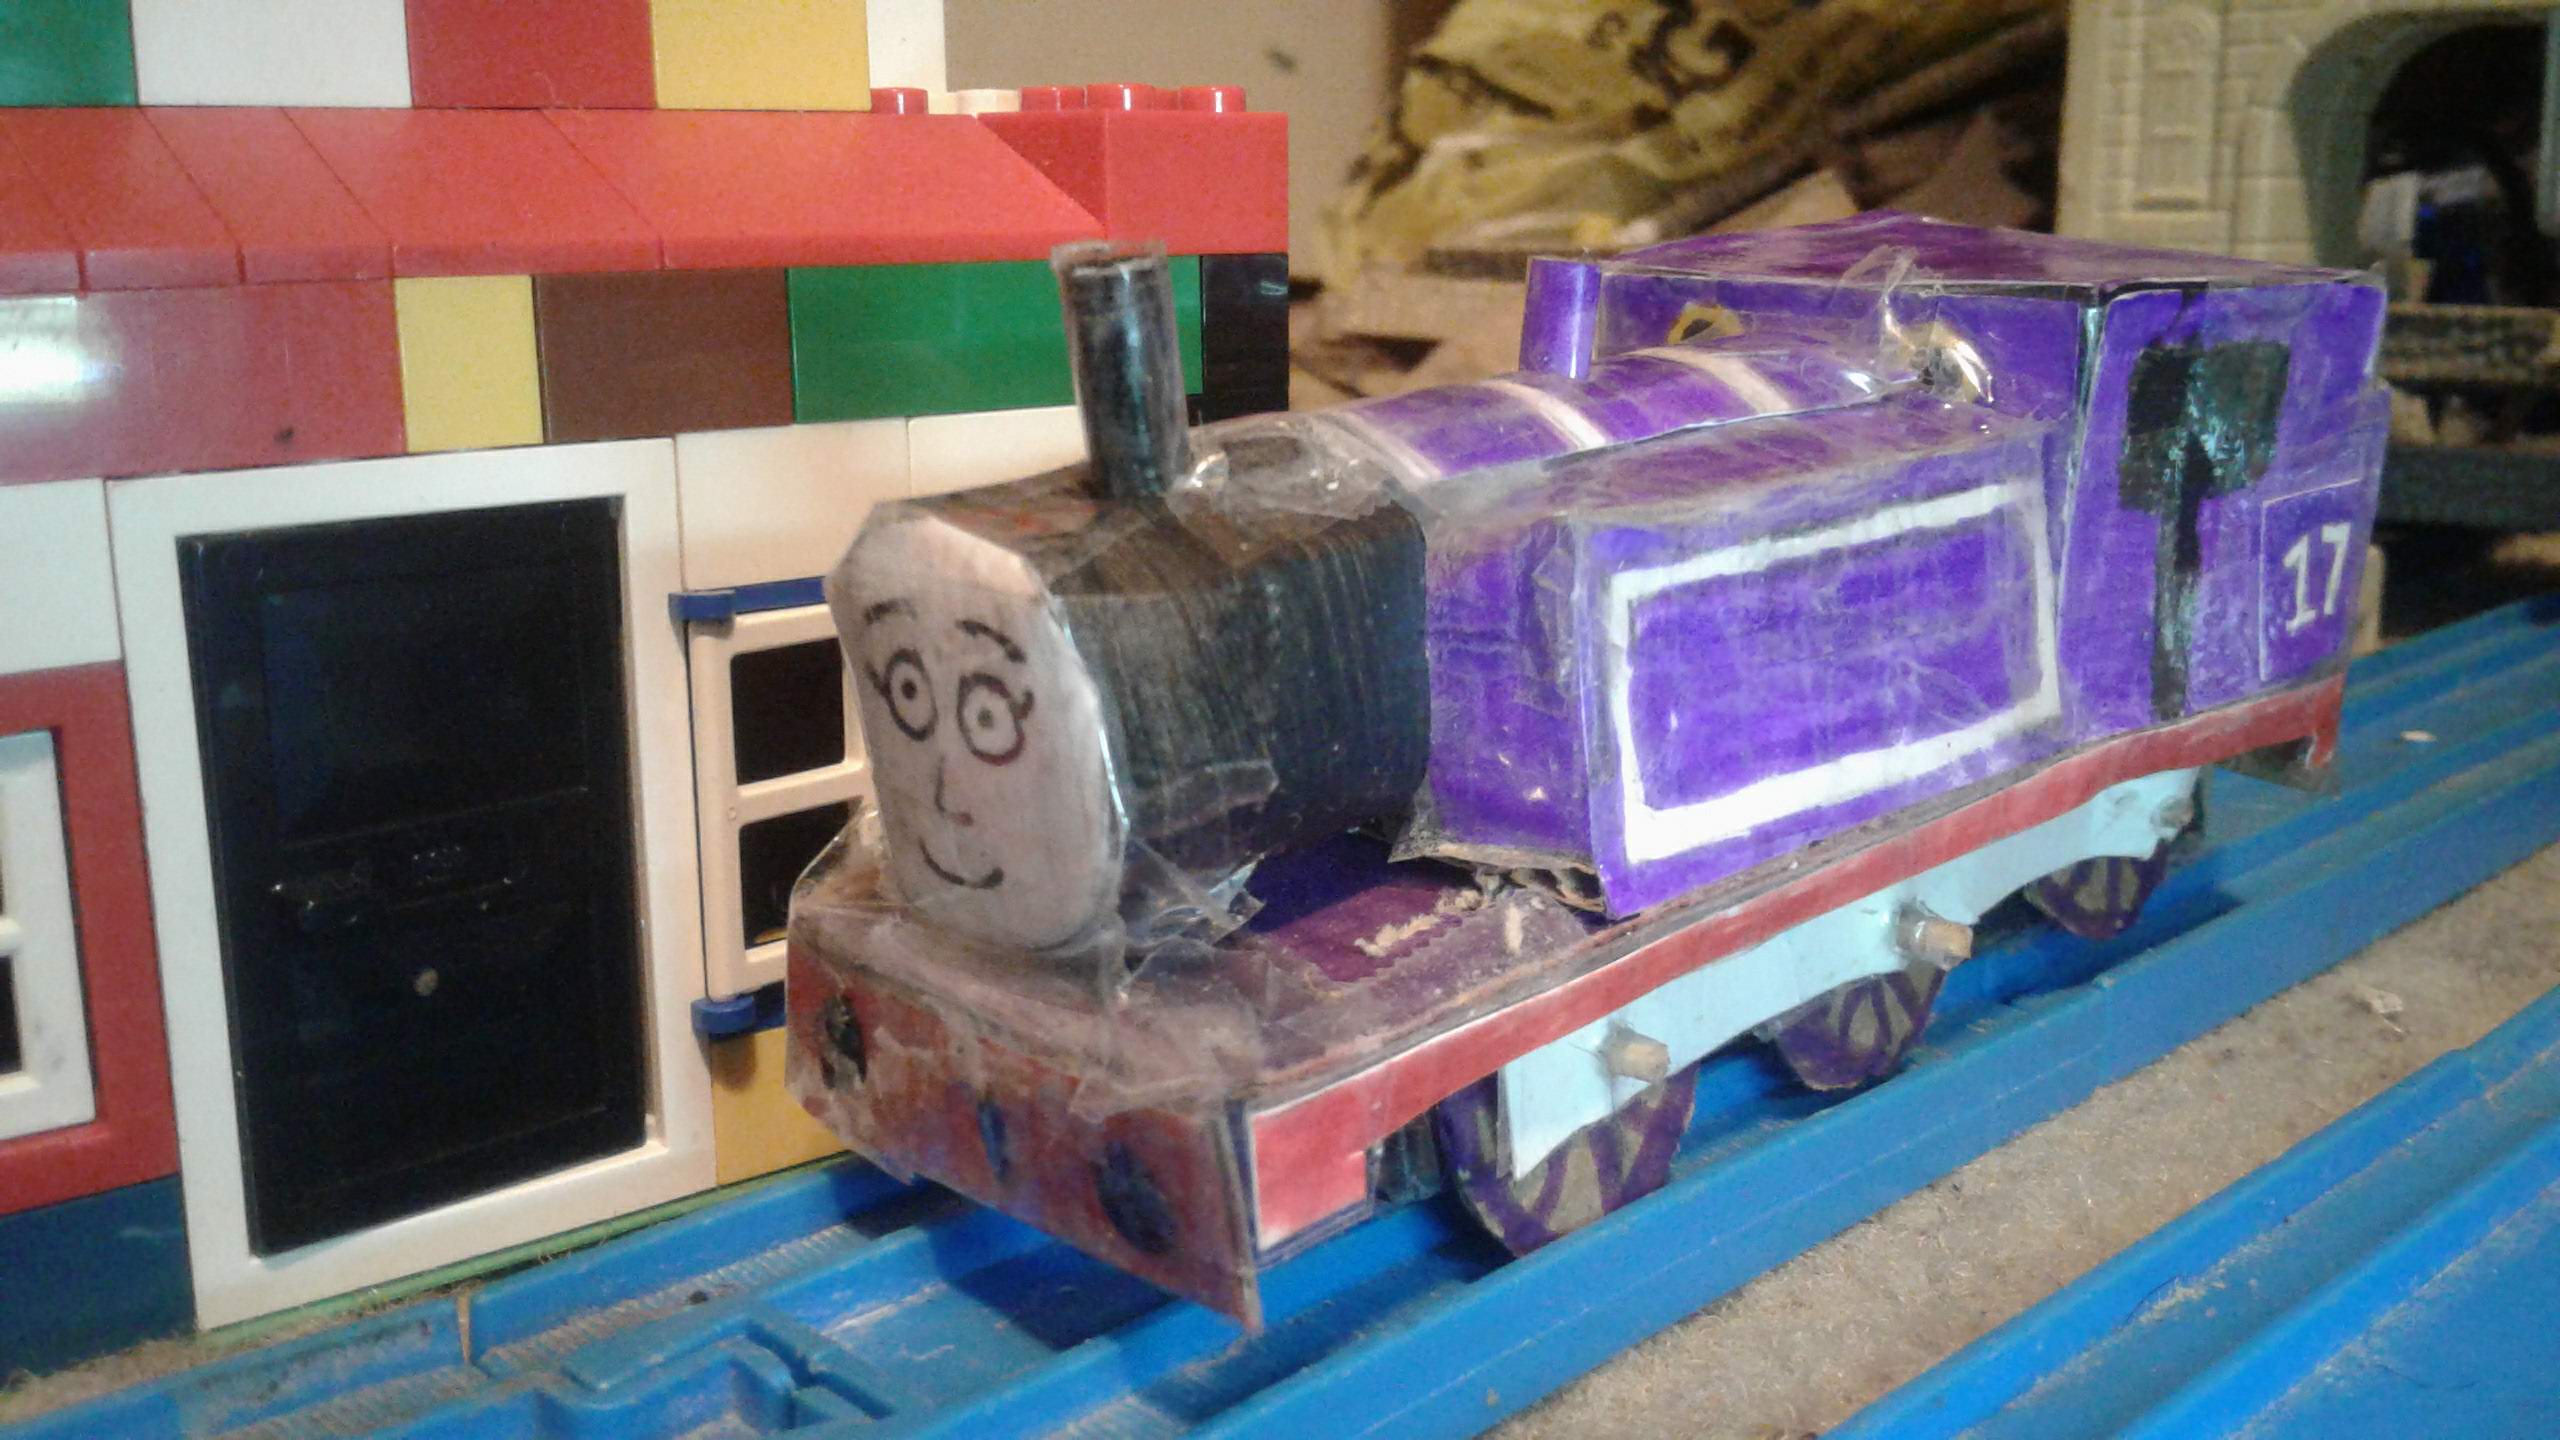 Thomas & Friends Purple Trains & Train Sets